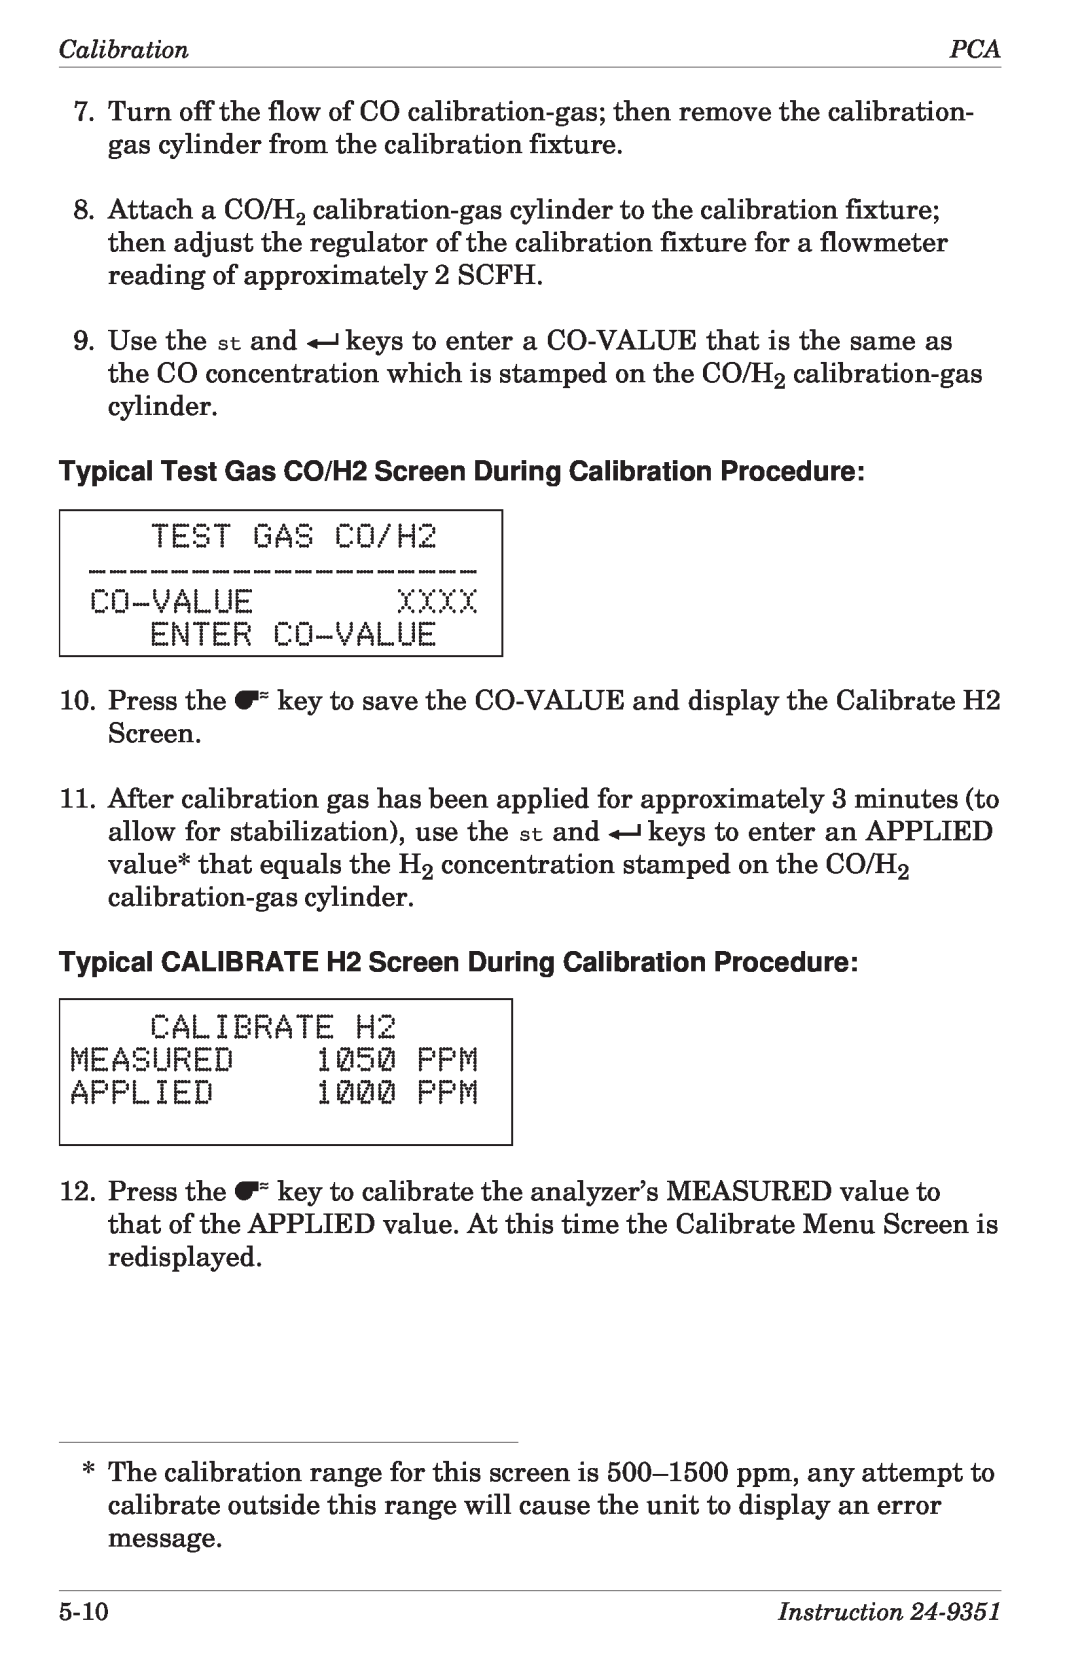 Bacharach 24-9351 manual TEST GAS CO/H2, Co-Valuexxxx Enter Co-Value, CALIBRATE H2, 1050, 1000, Measured, Applied 